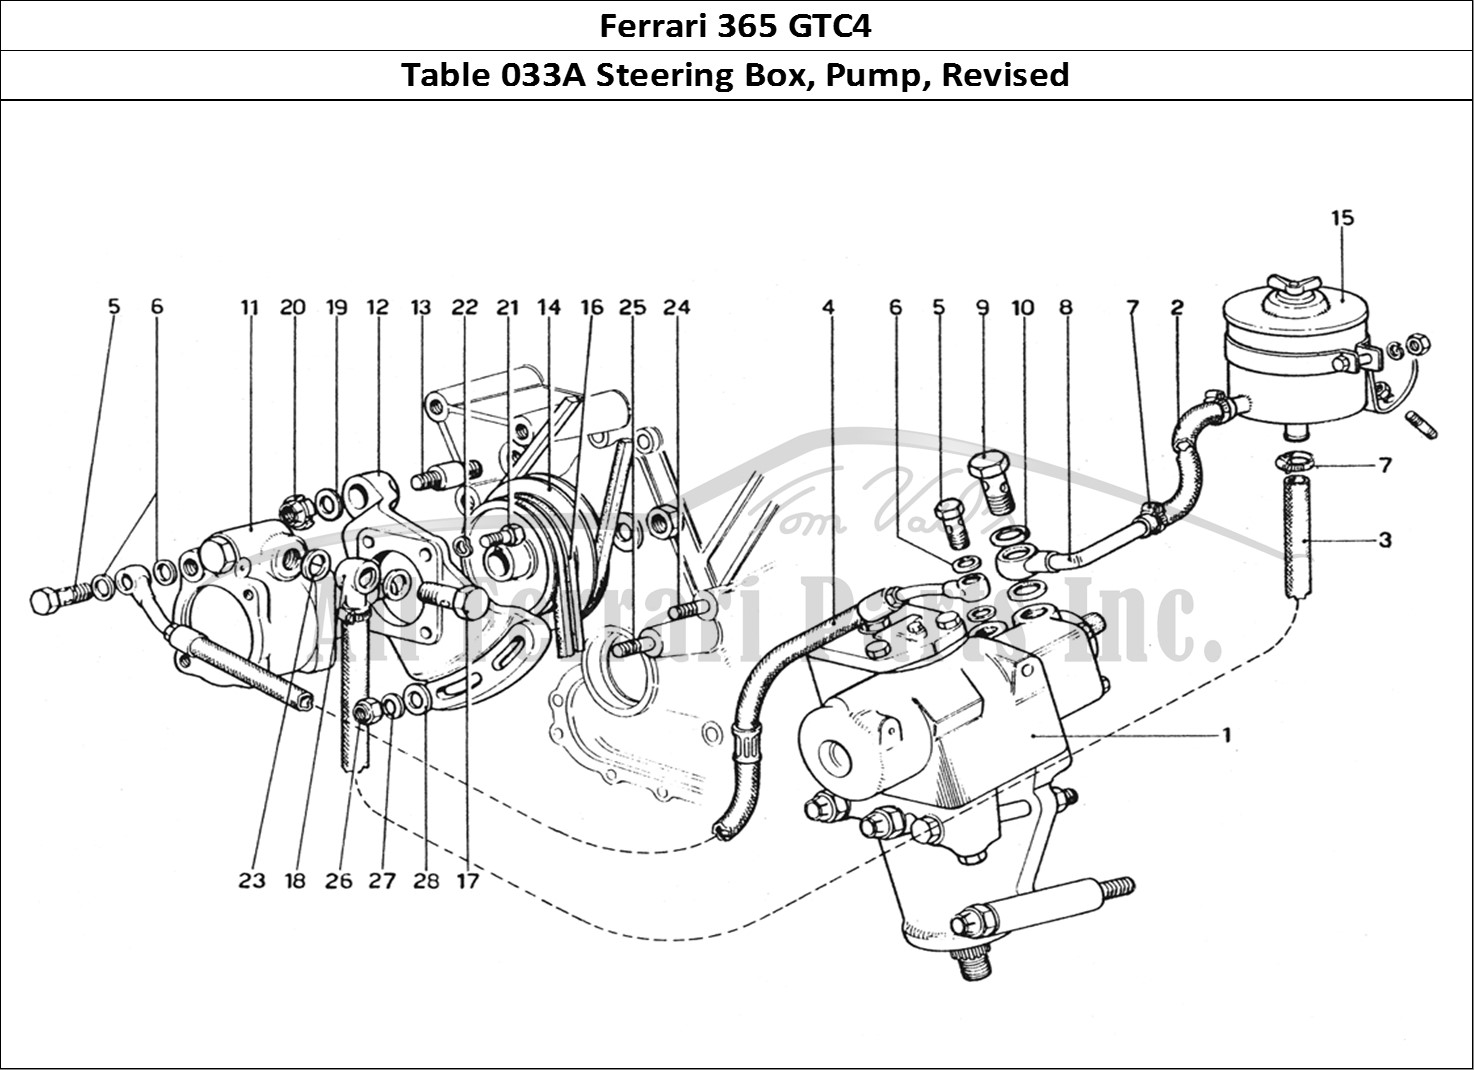 Ferrari Parts Ferrari 365 GTC4 (Mechanical) Page 033 Steering box & pump - Rev